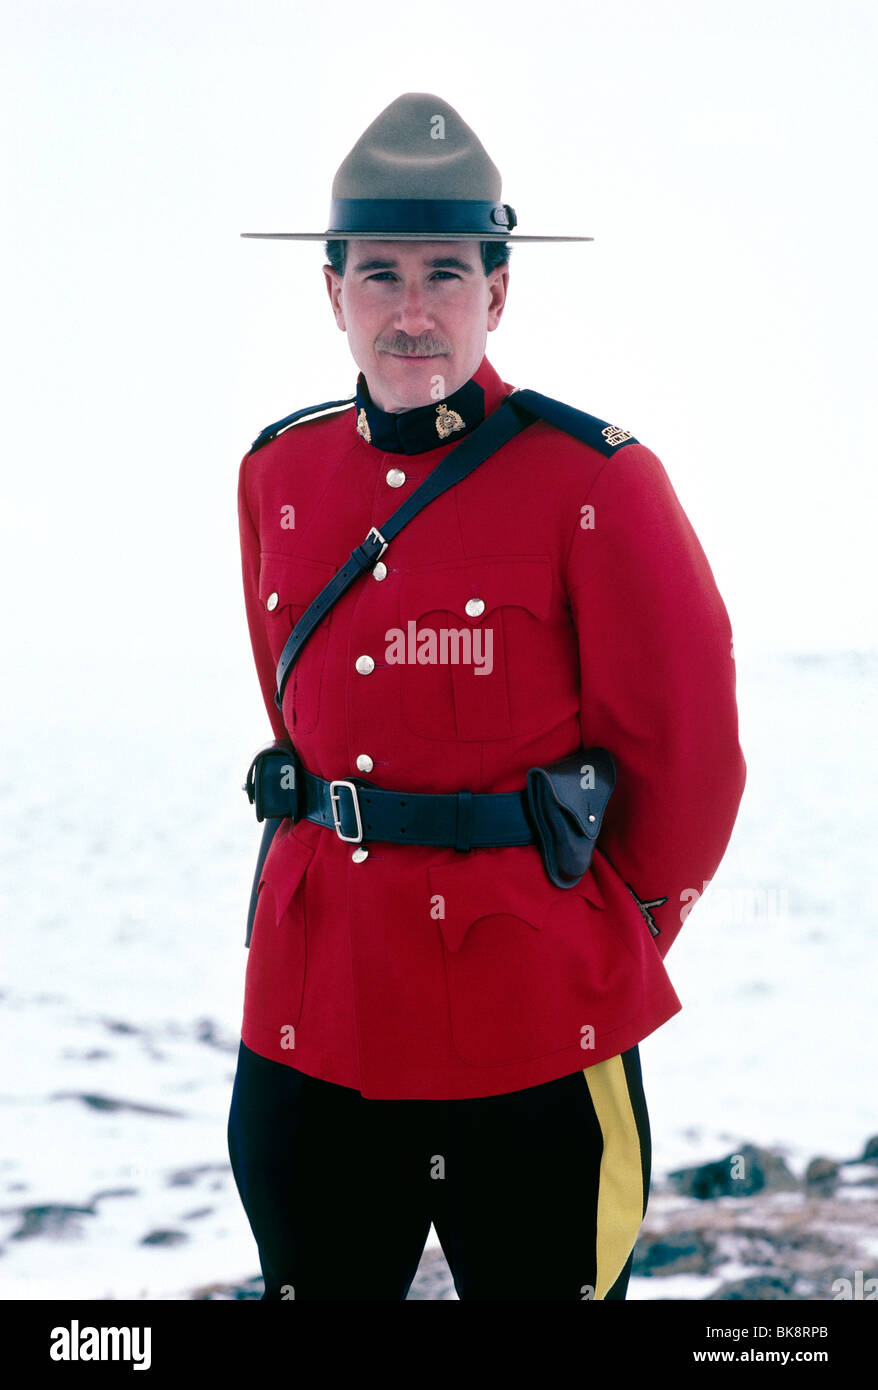 Winter Portrait Of Michael Dotzko Royal Canadian Mounted Policeman In